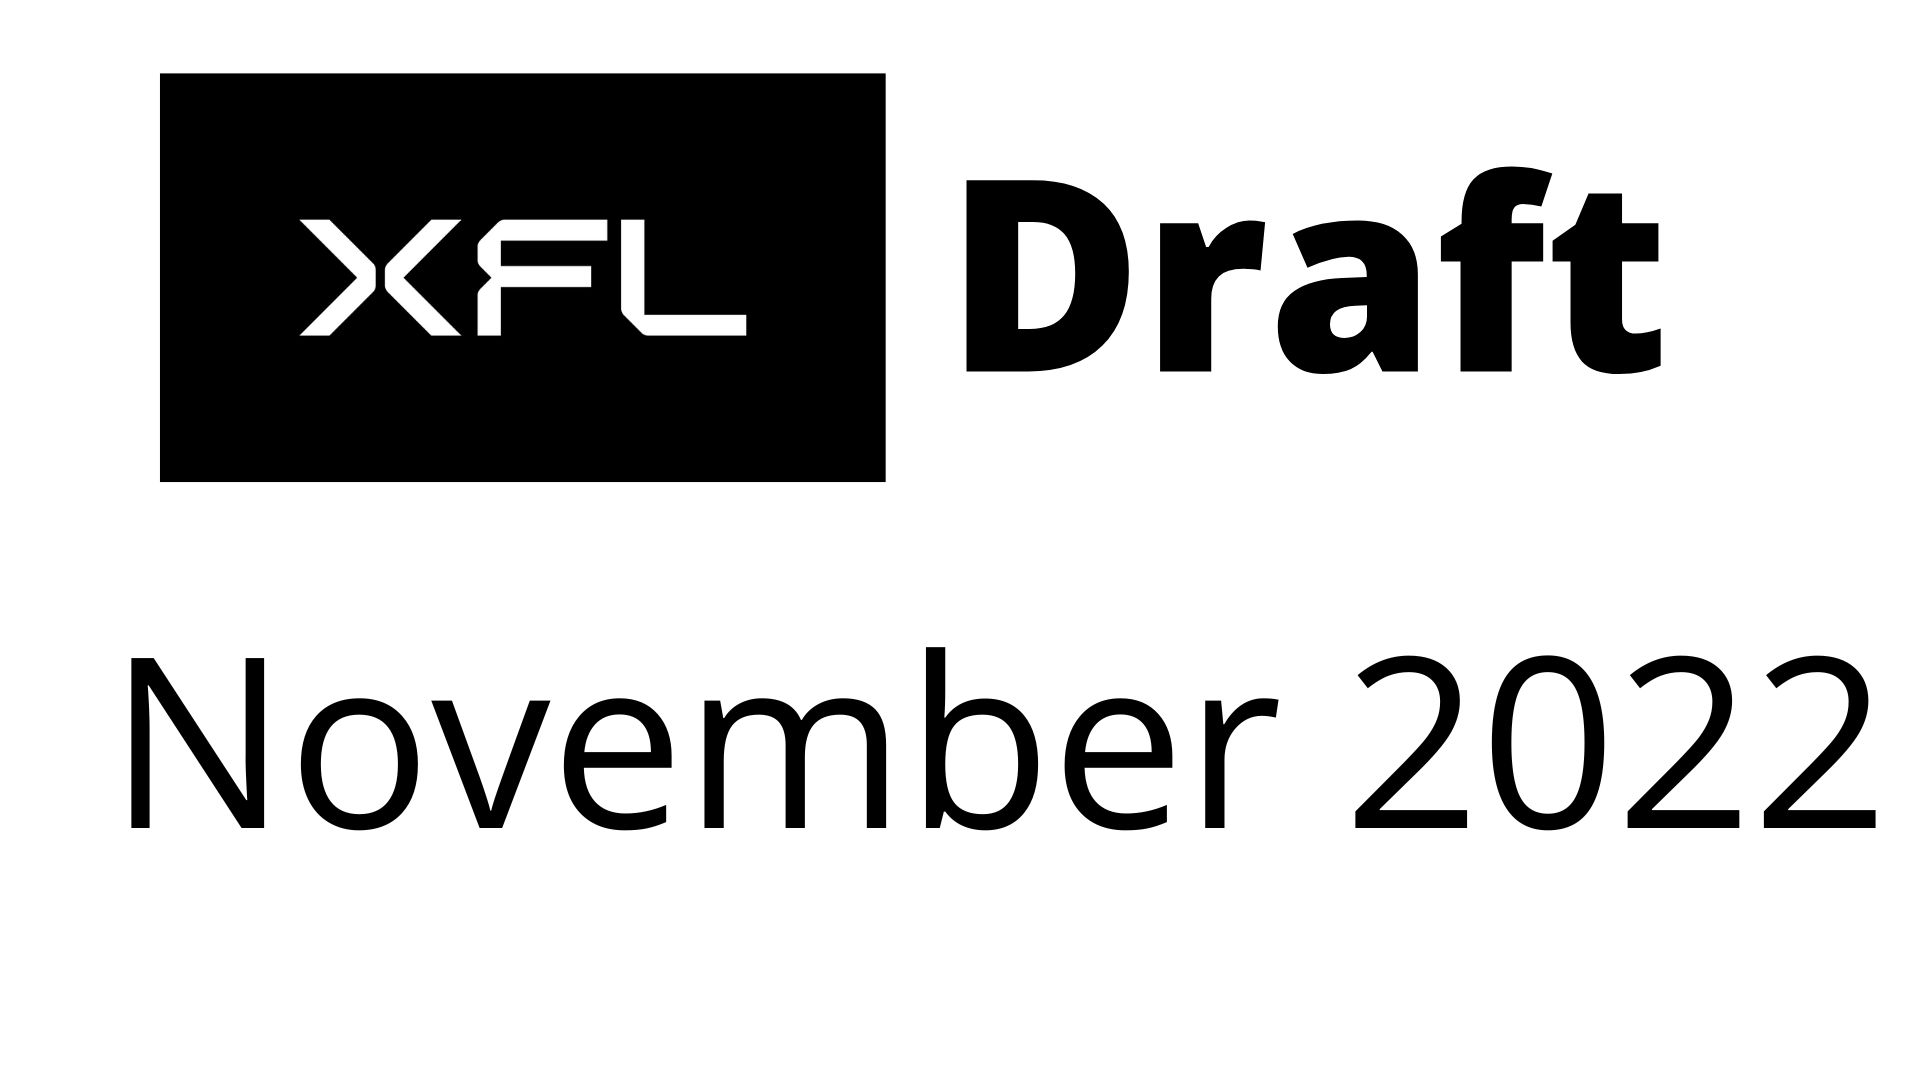 XFL Draft November 2022, Supplemental Draft Details, Player Pool & More